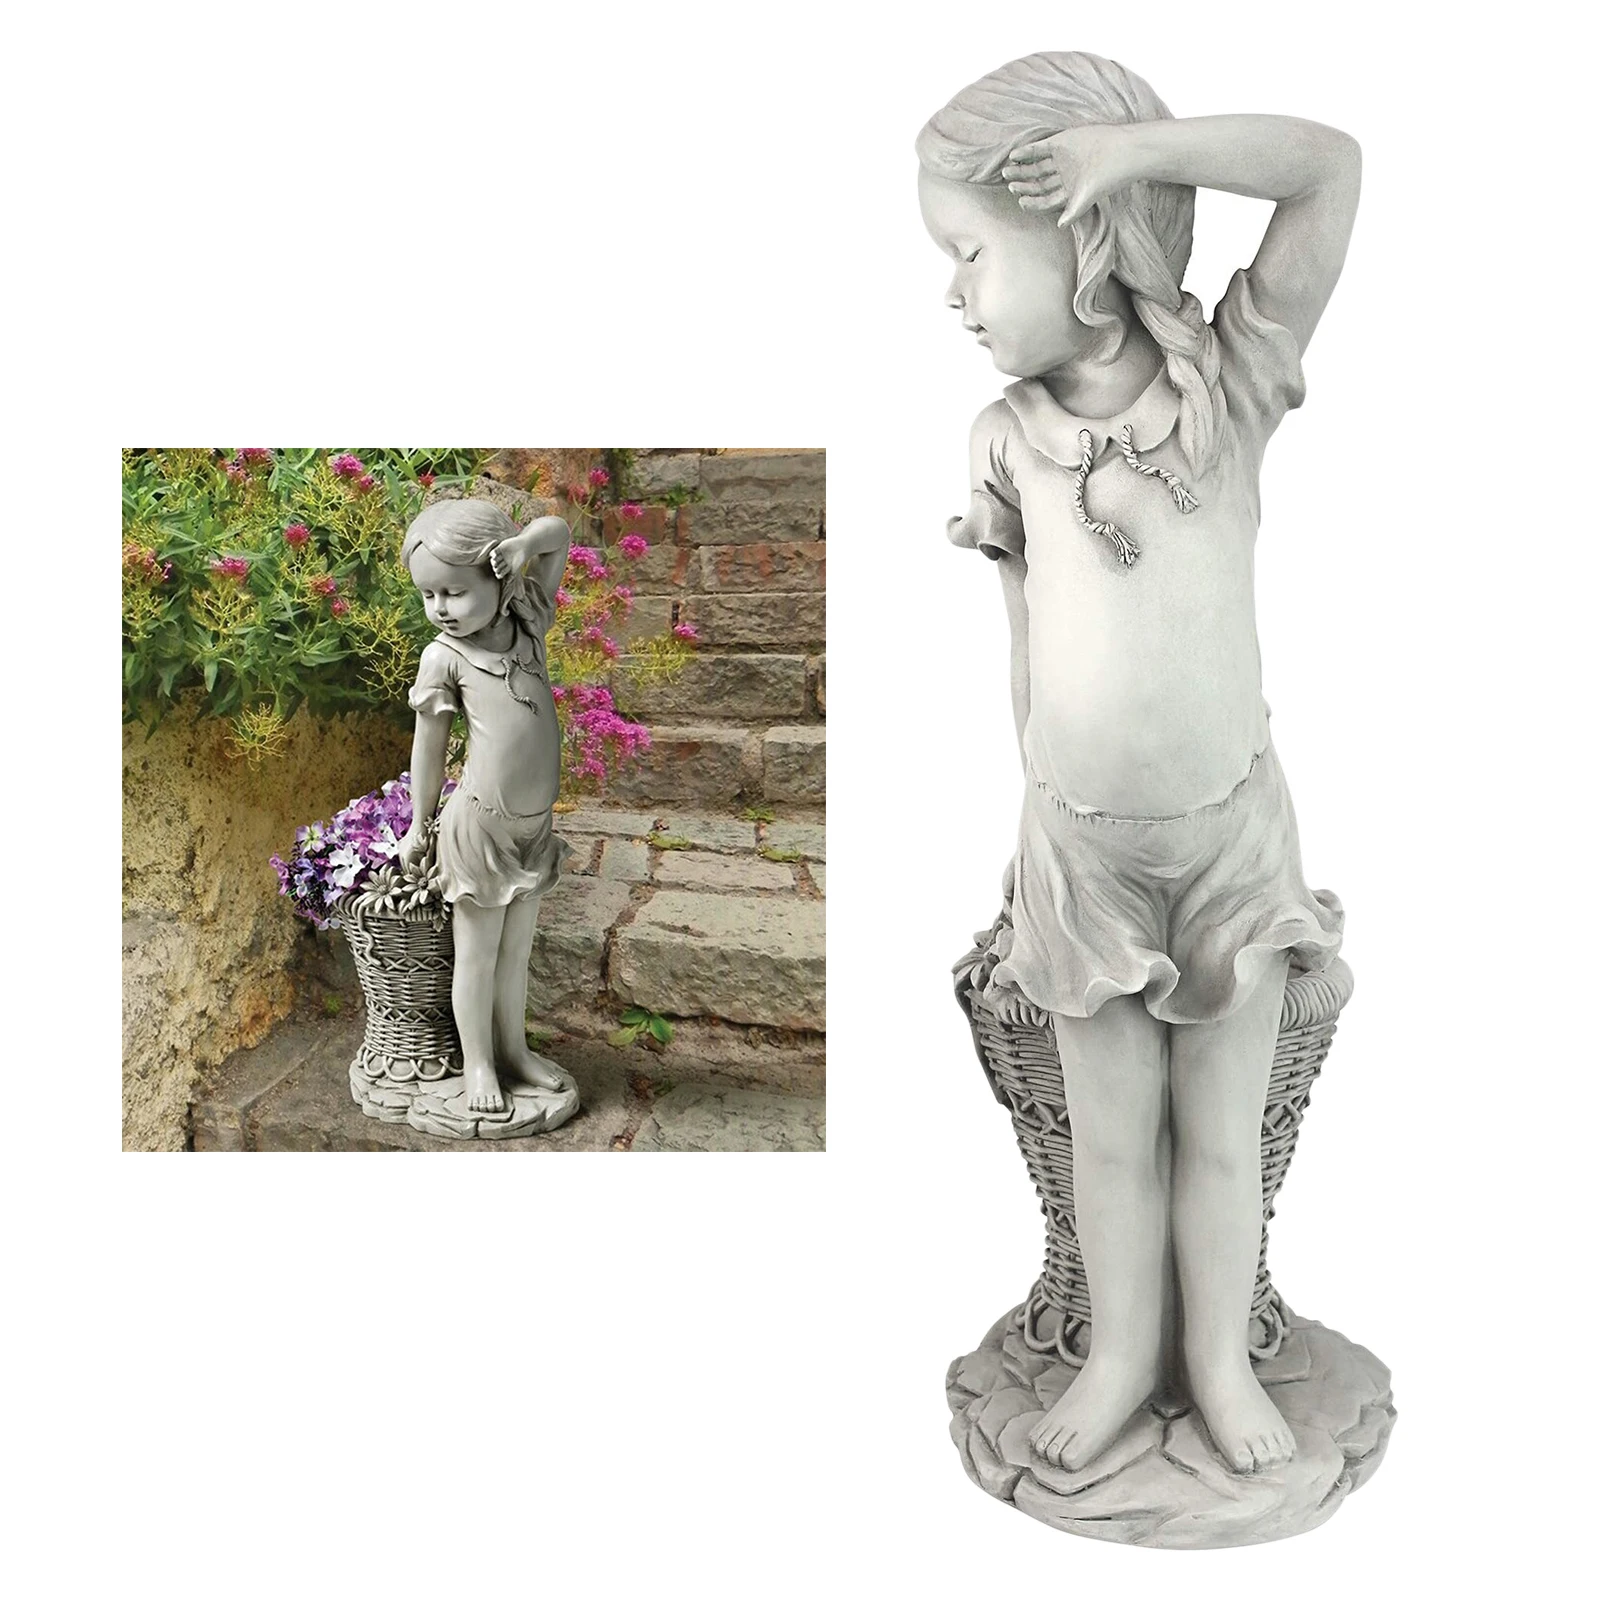 Flower Girl Statue Adorable Child Outdoor Sculpture Garden Yard Decor Ornament Antique Stone